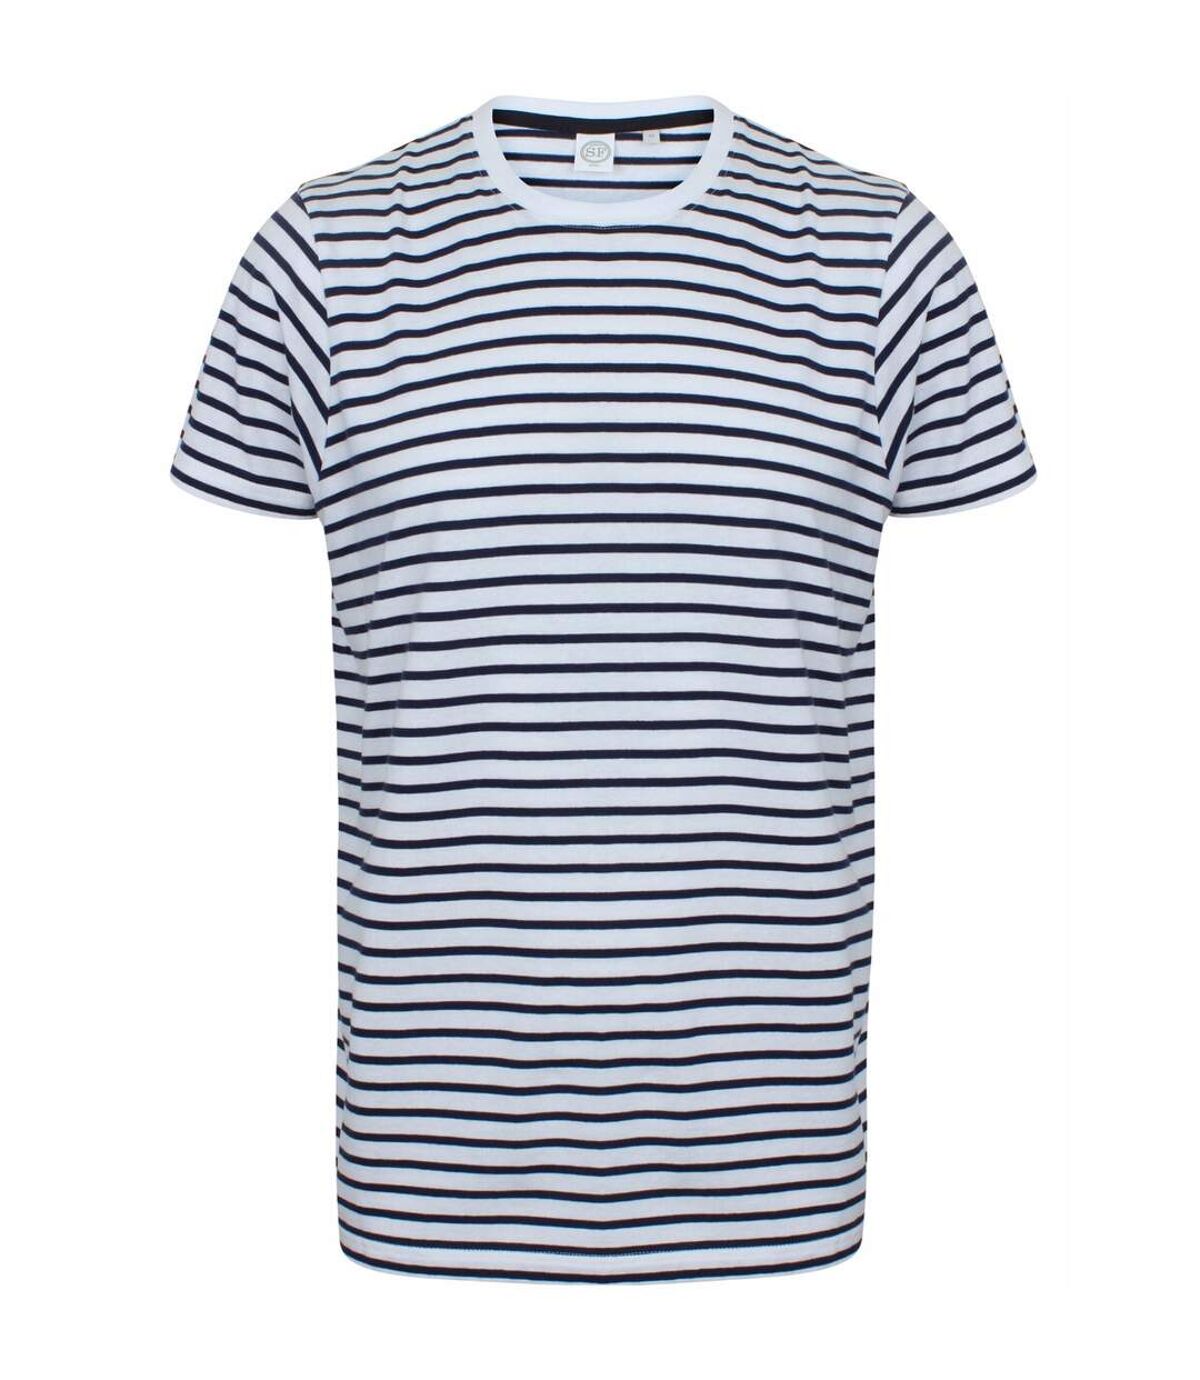 Skinni Fit Striped - T-shirt à manches courtes - Adulte unisexe (Blanc / bleu marine) - UTRW5499